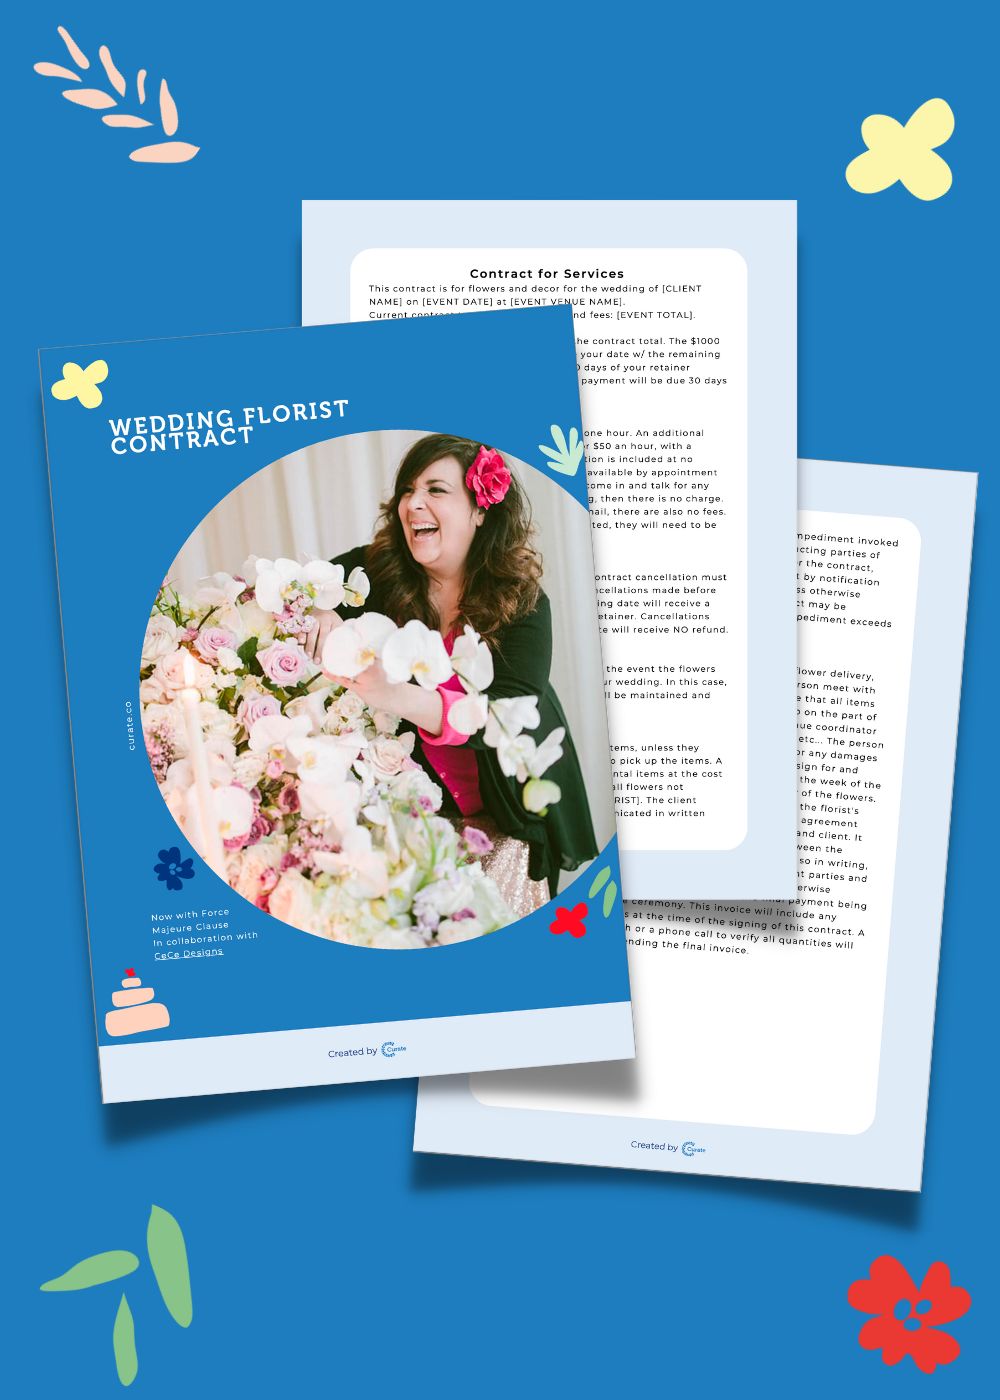 Wedding Florist Contract LP Header Image (1000 × 1400 px)